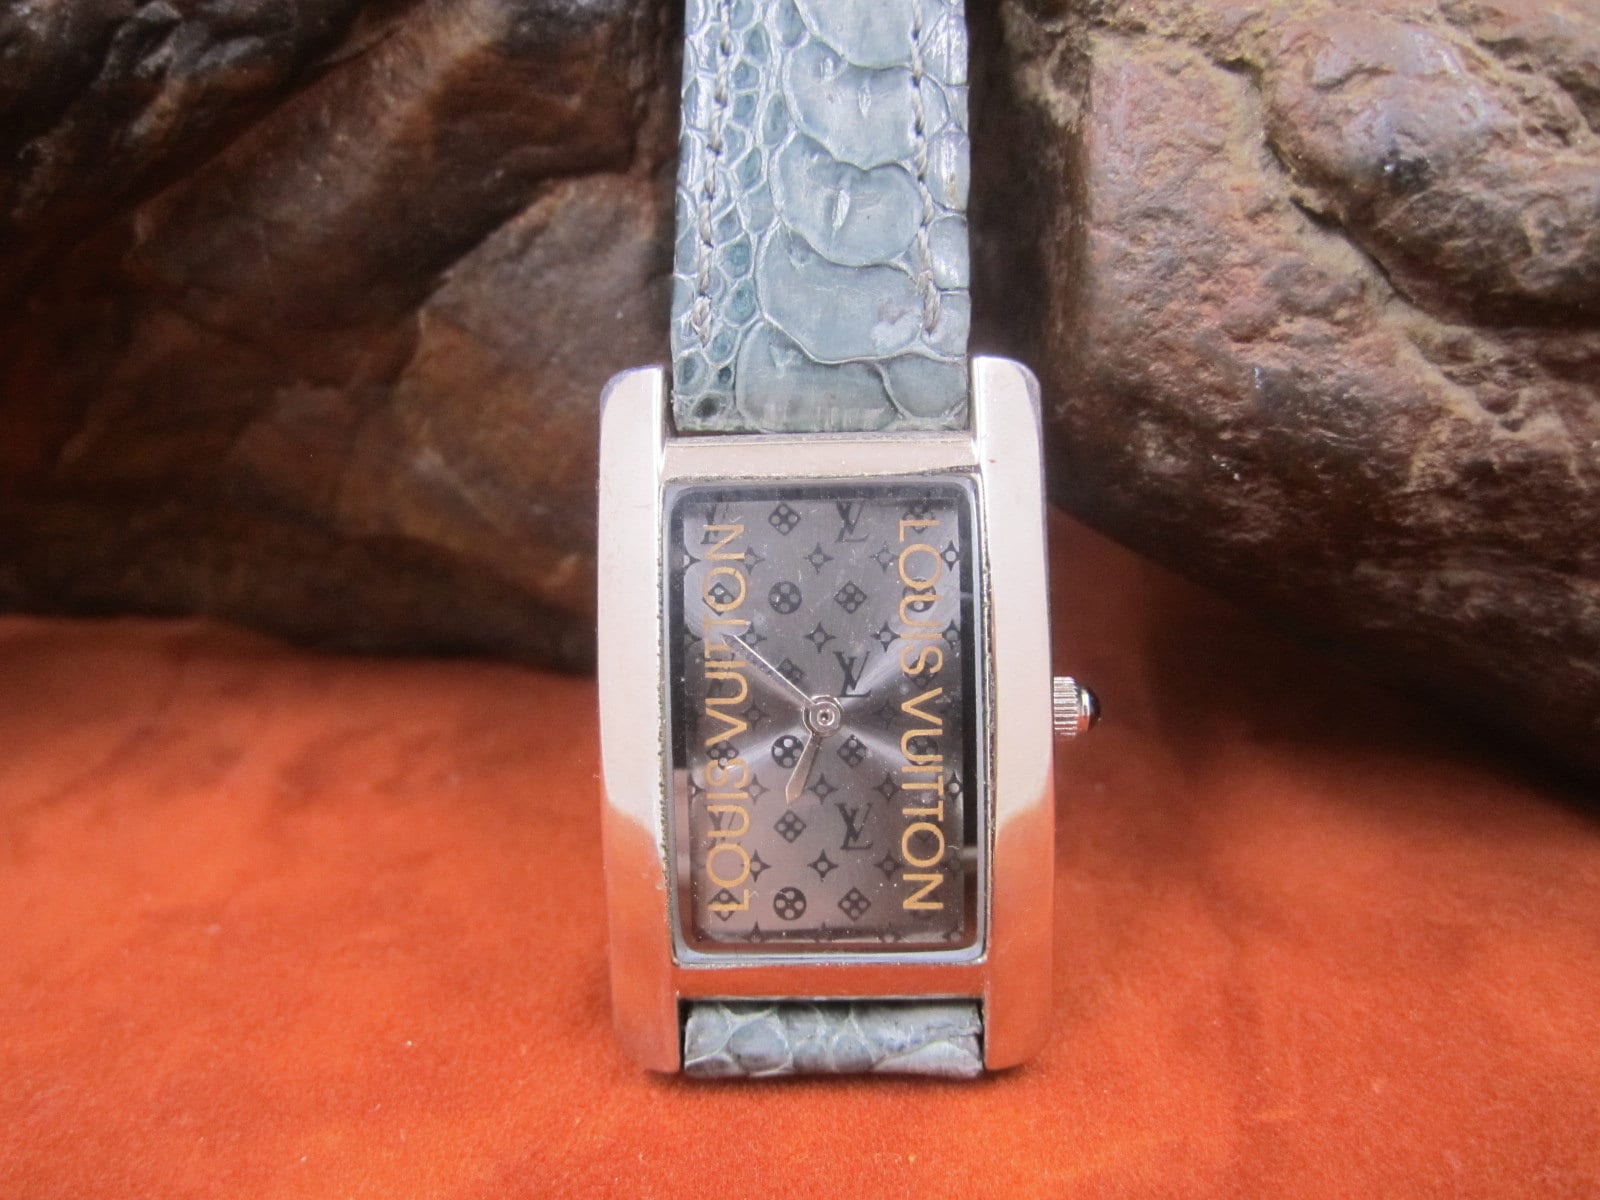 Vintage Louis Vuitton Watch